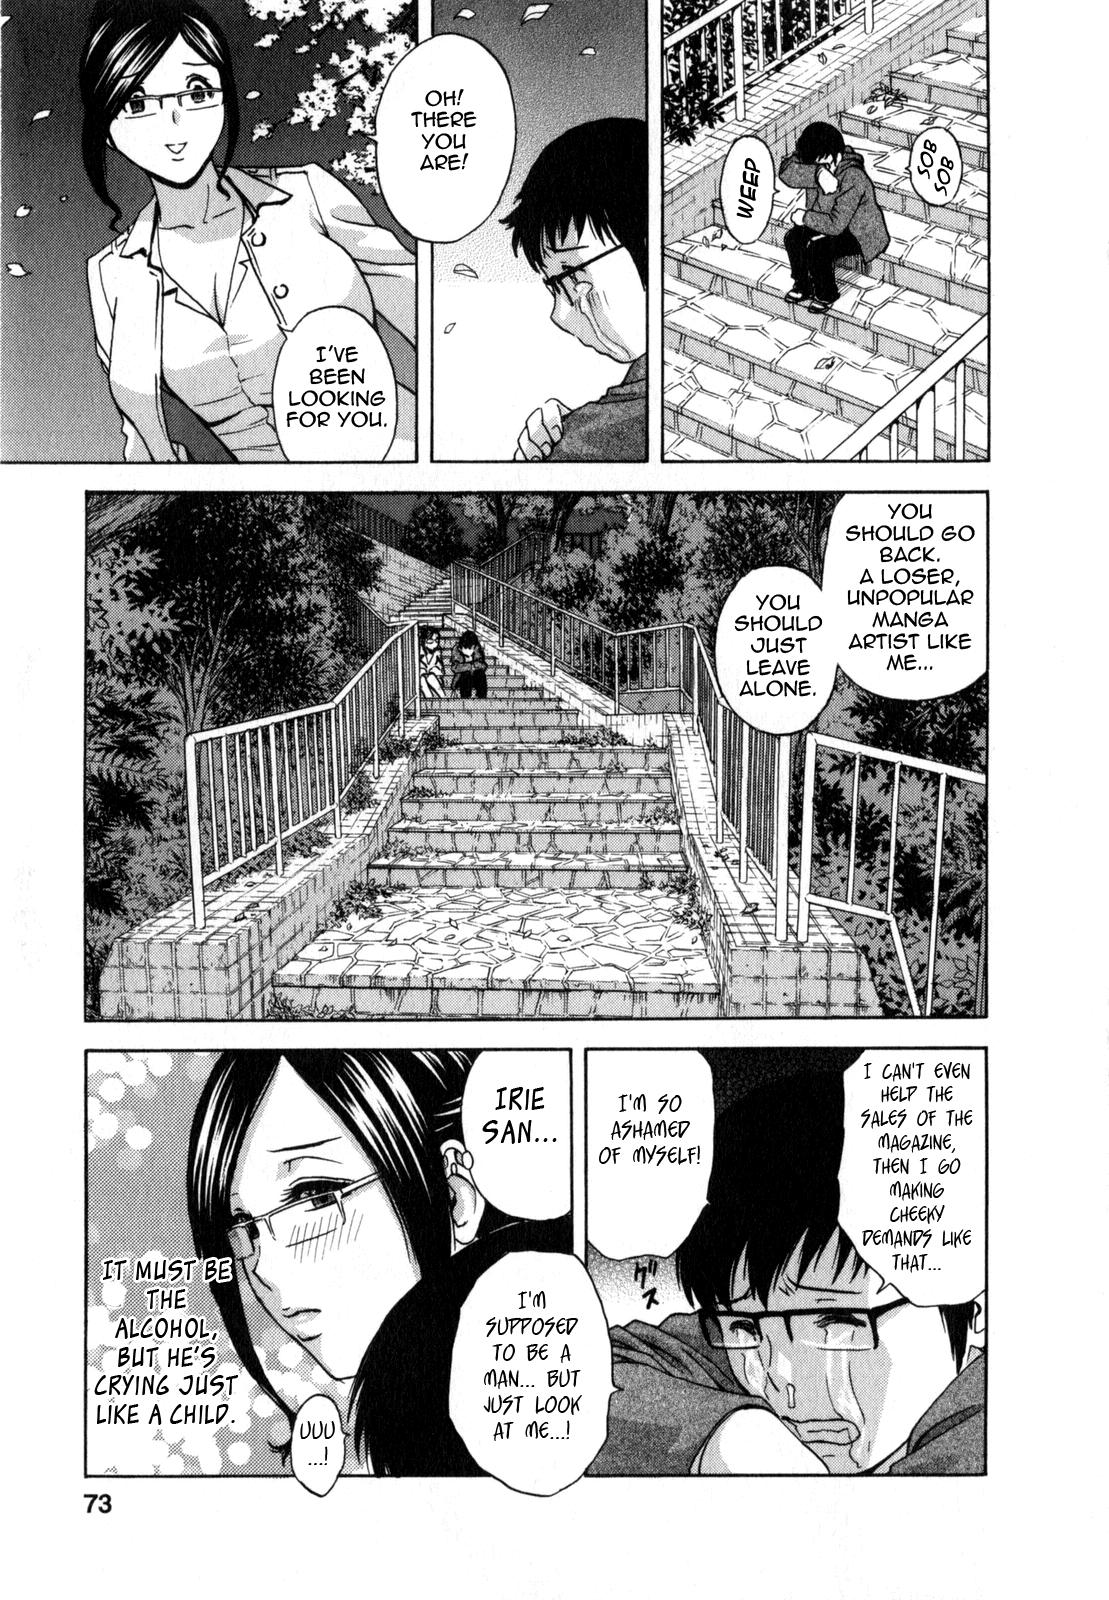 [Hidemaru] Life with Married Women Just Like a Manga 2 - Ch. 1-8 [English] {Tadanohito} 75